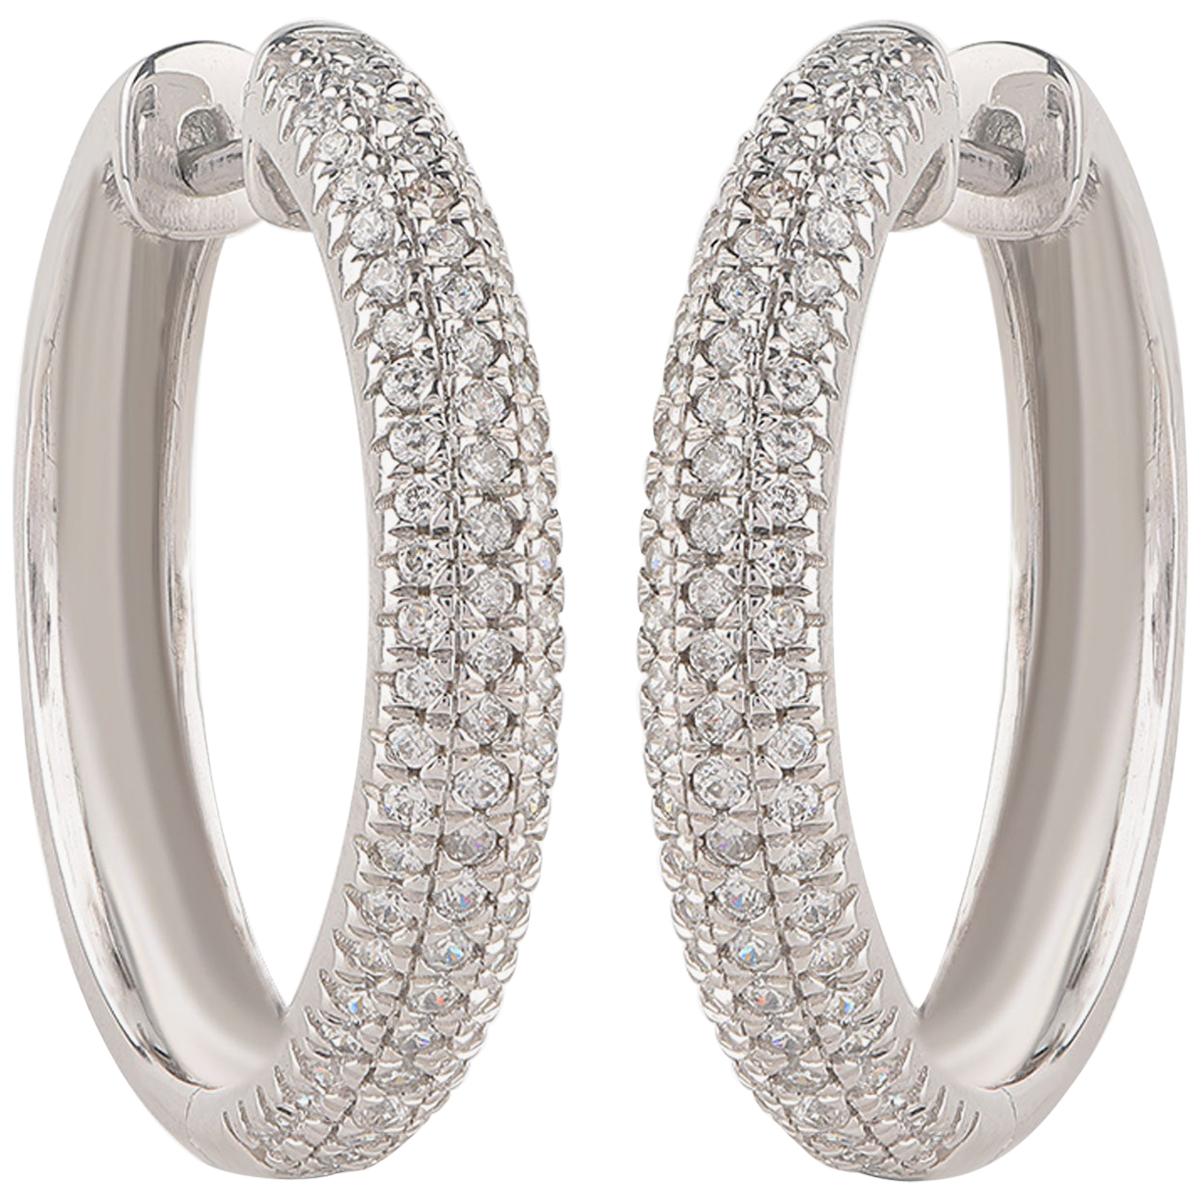 TJD Boucles d'oreilles classiques en or blanc 18 carats à 3 rangs de diamants de 1,00 carat